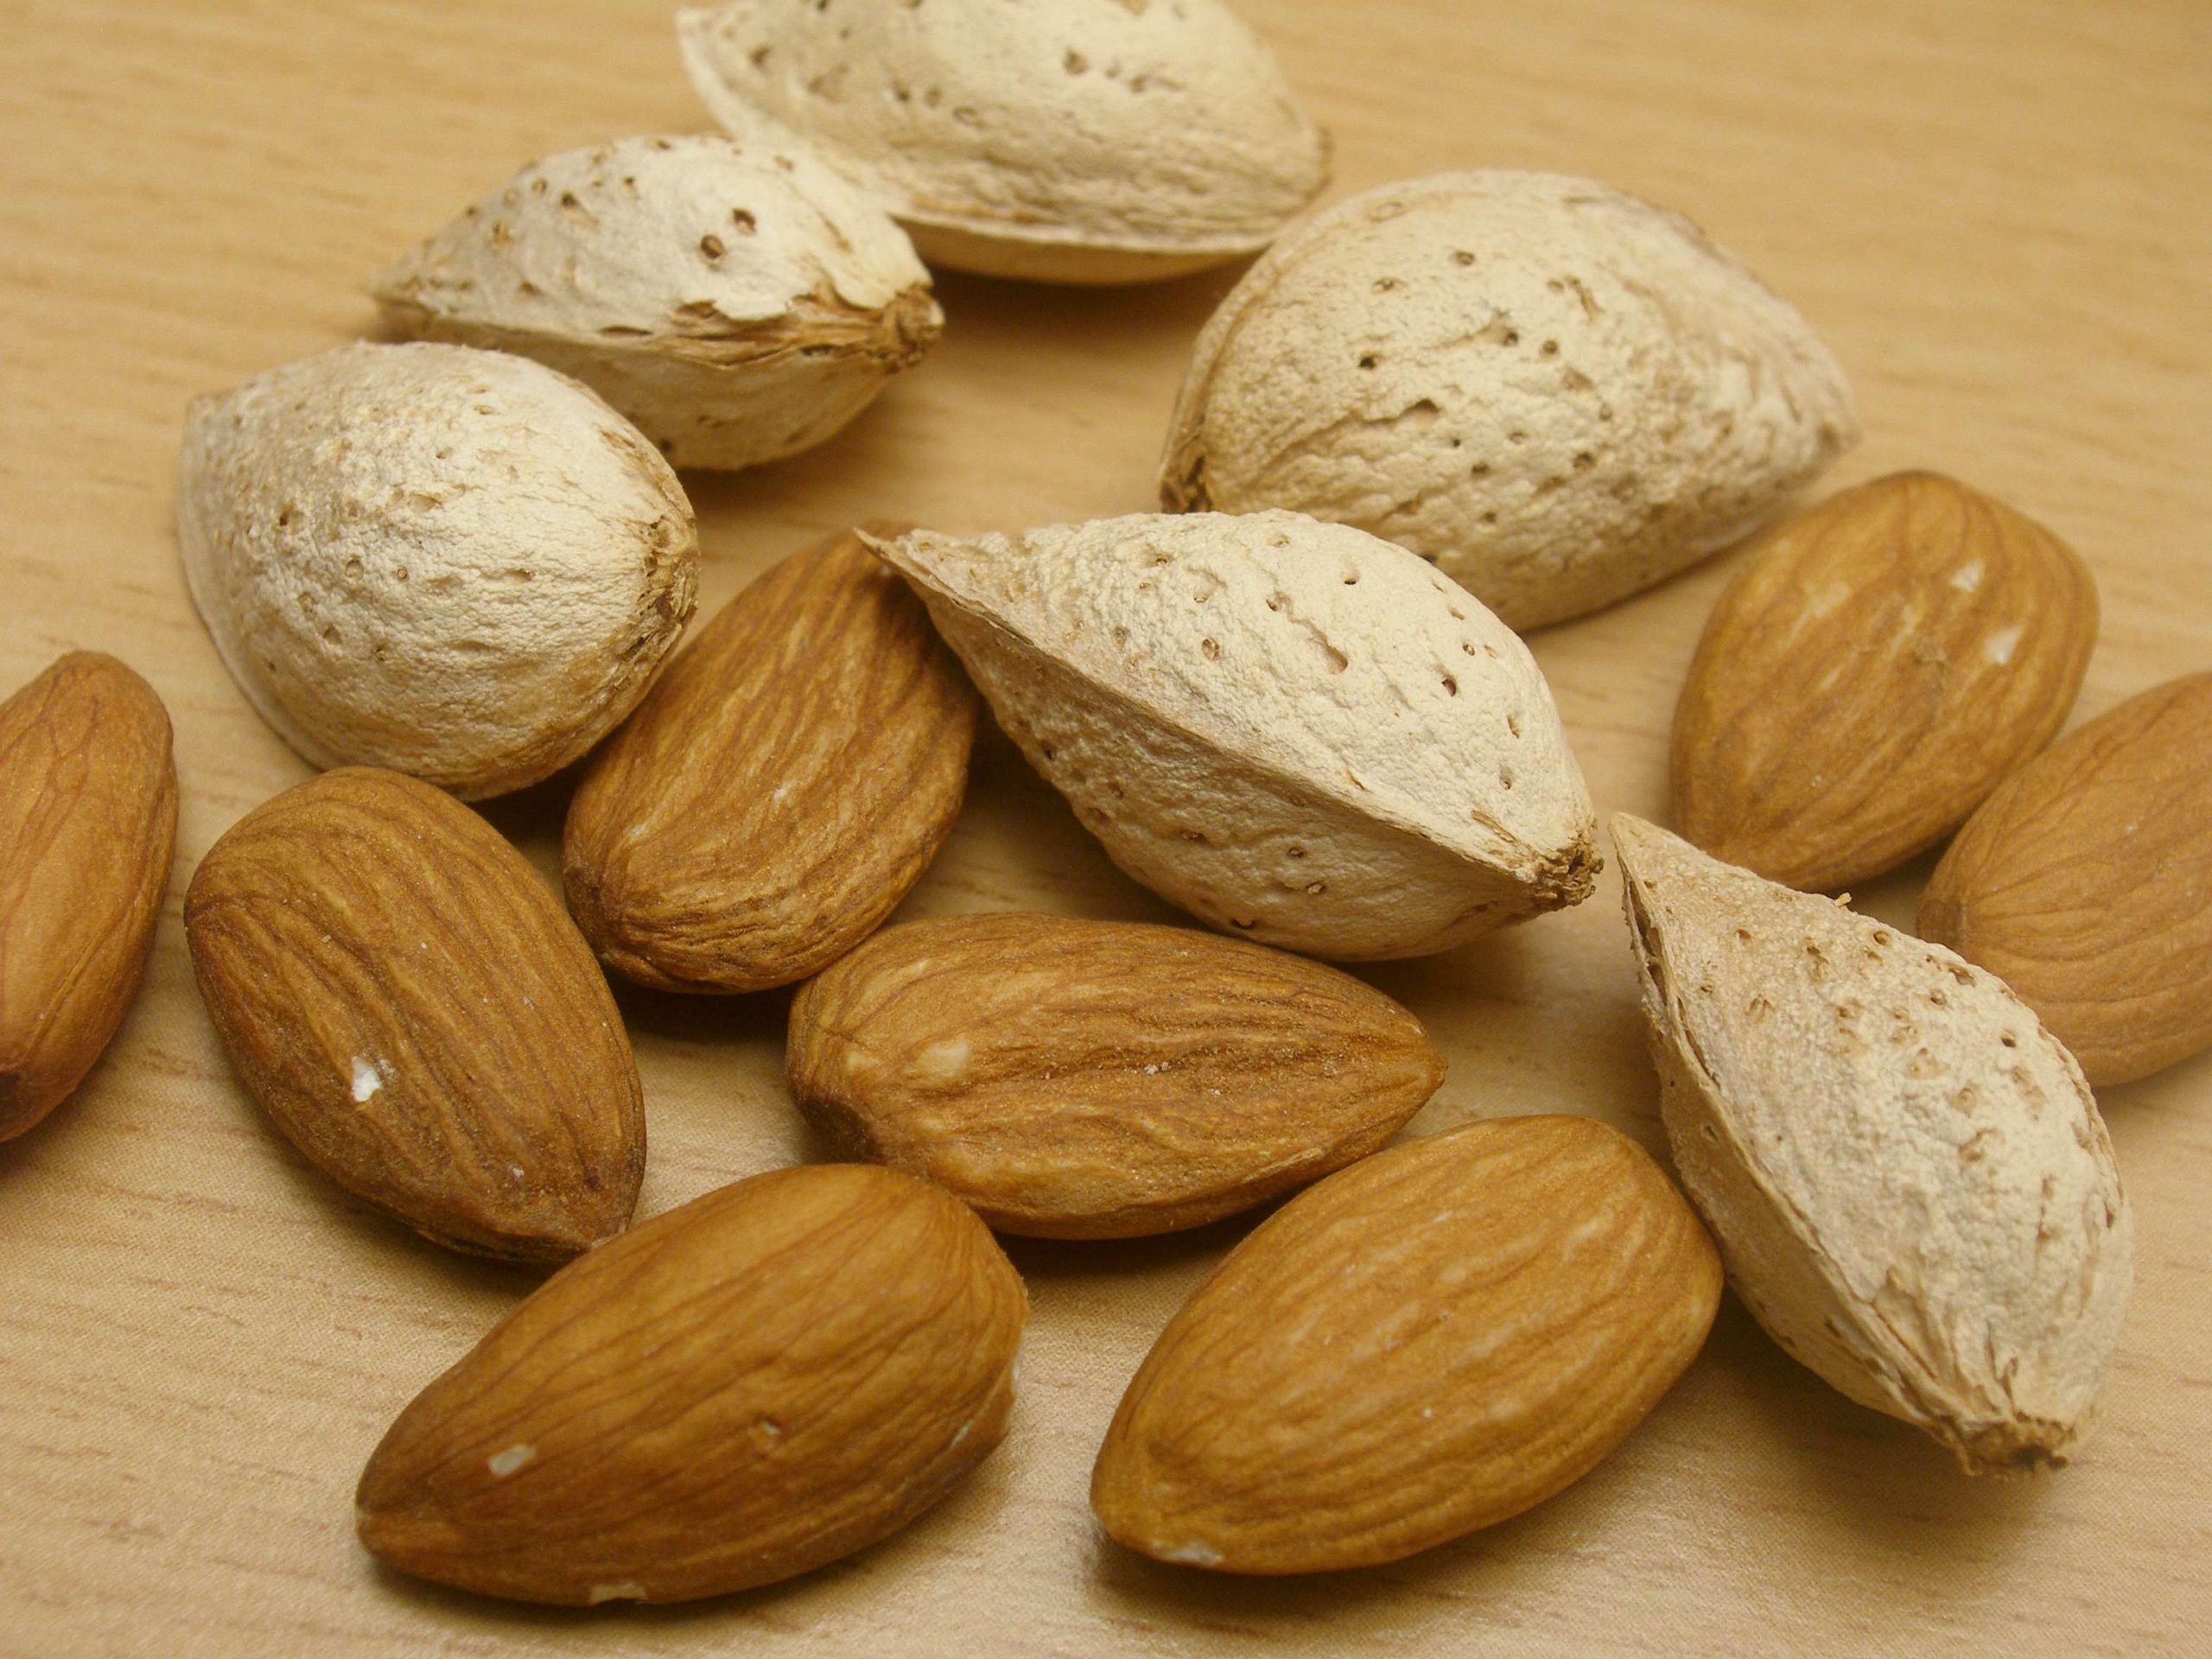 Sale of Saman Iranian paper almonds